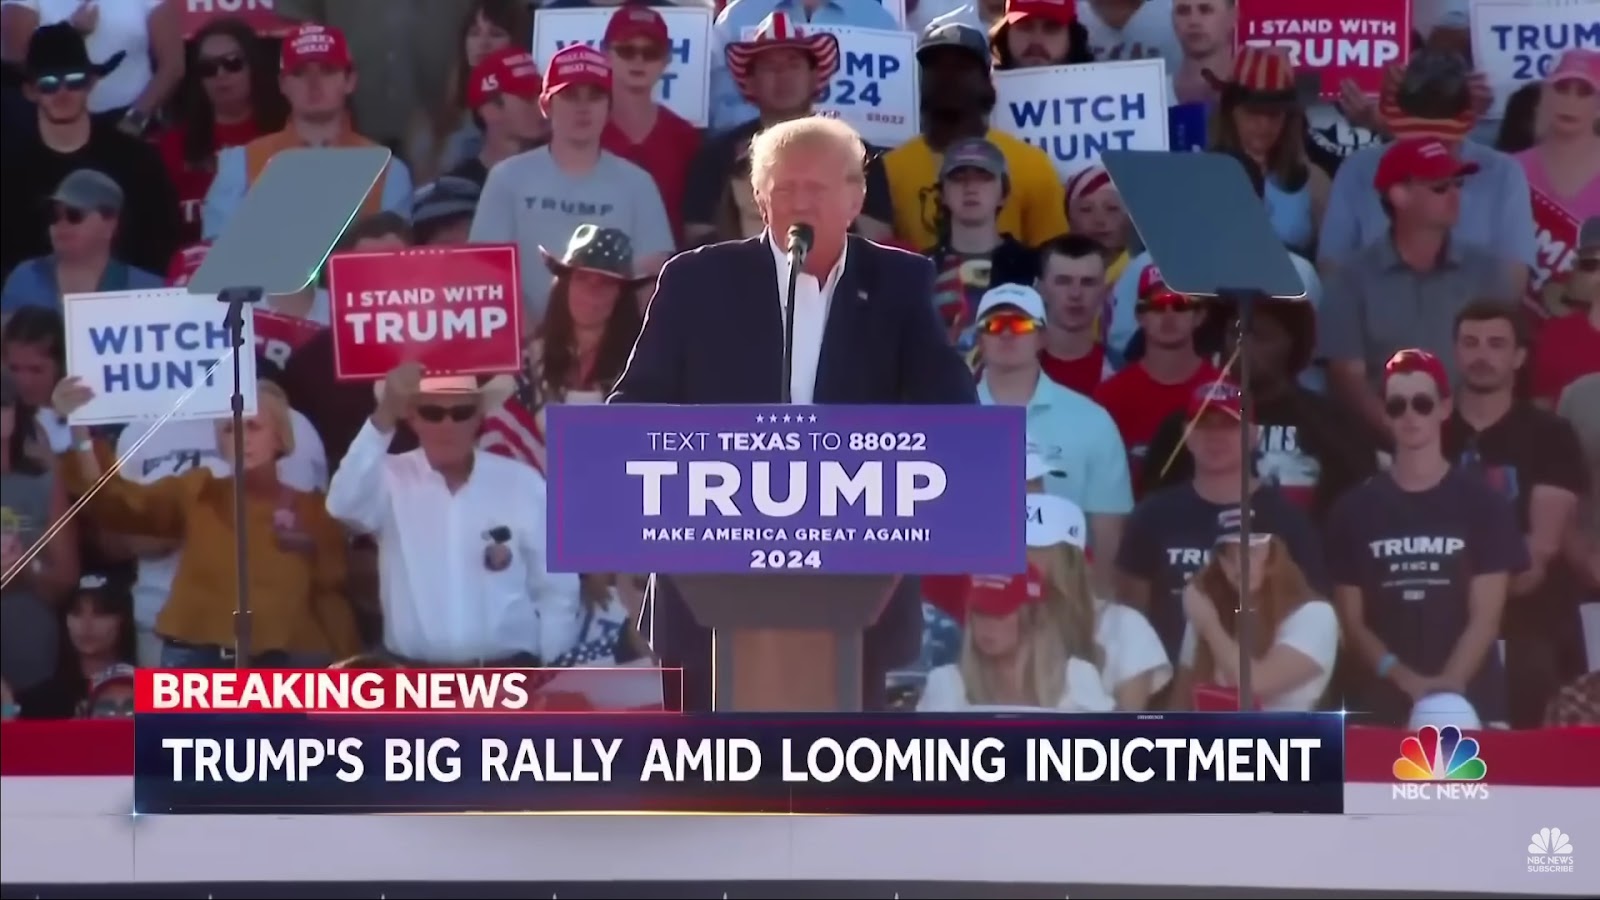 Trump Rally in Waco Texas: Highlights and Analysis